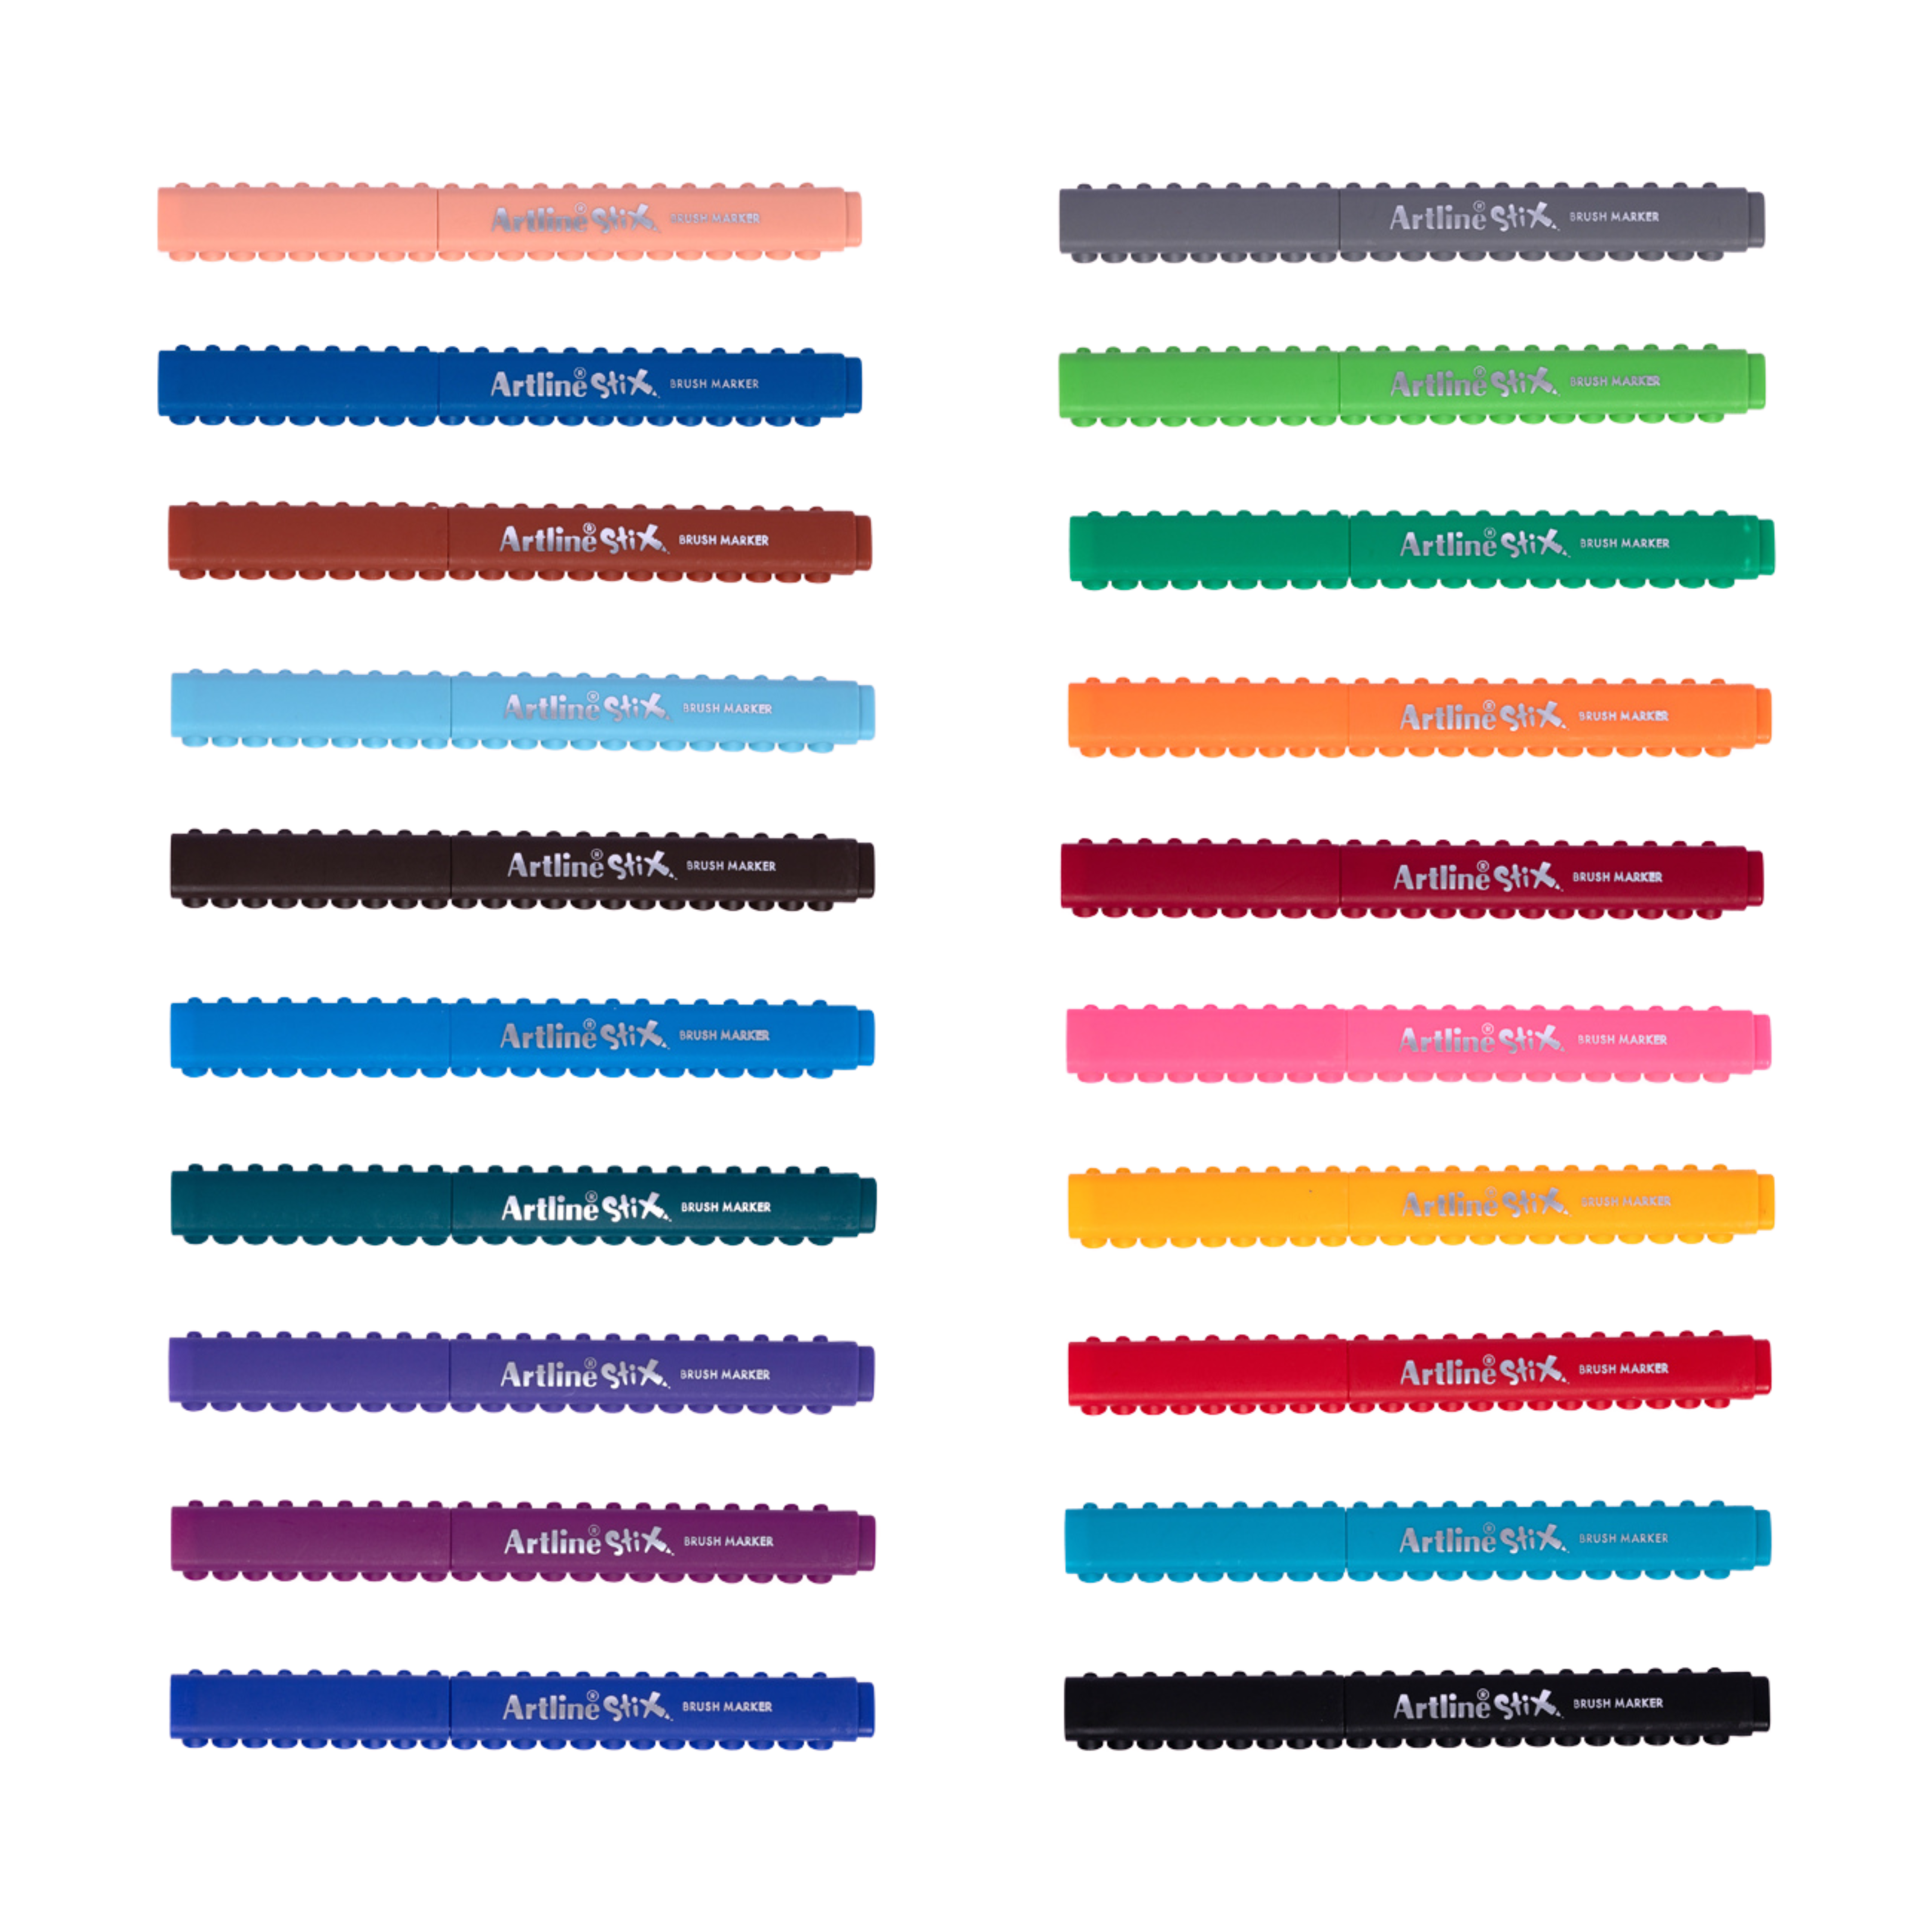 Shachihata Artline Stix Pinselmarker – 20 Farben Set